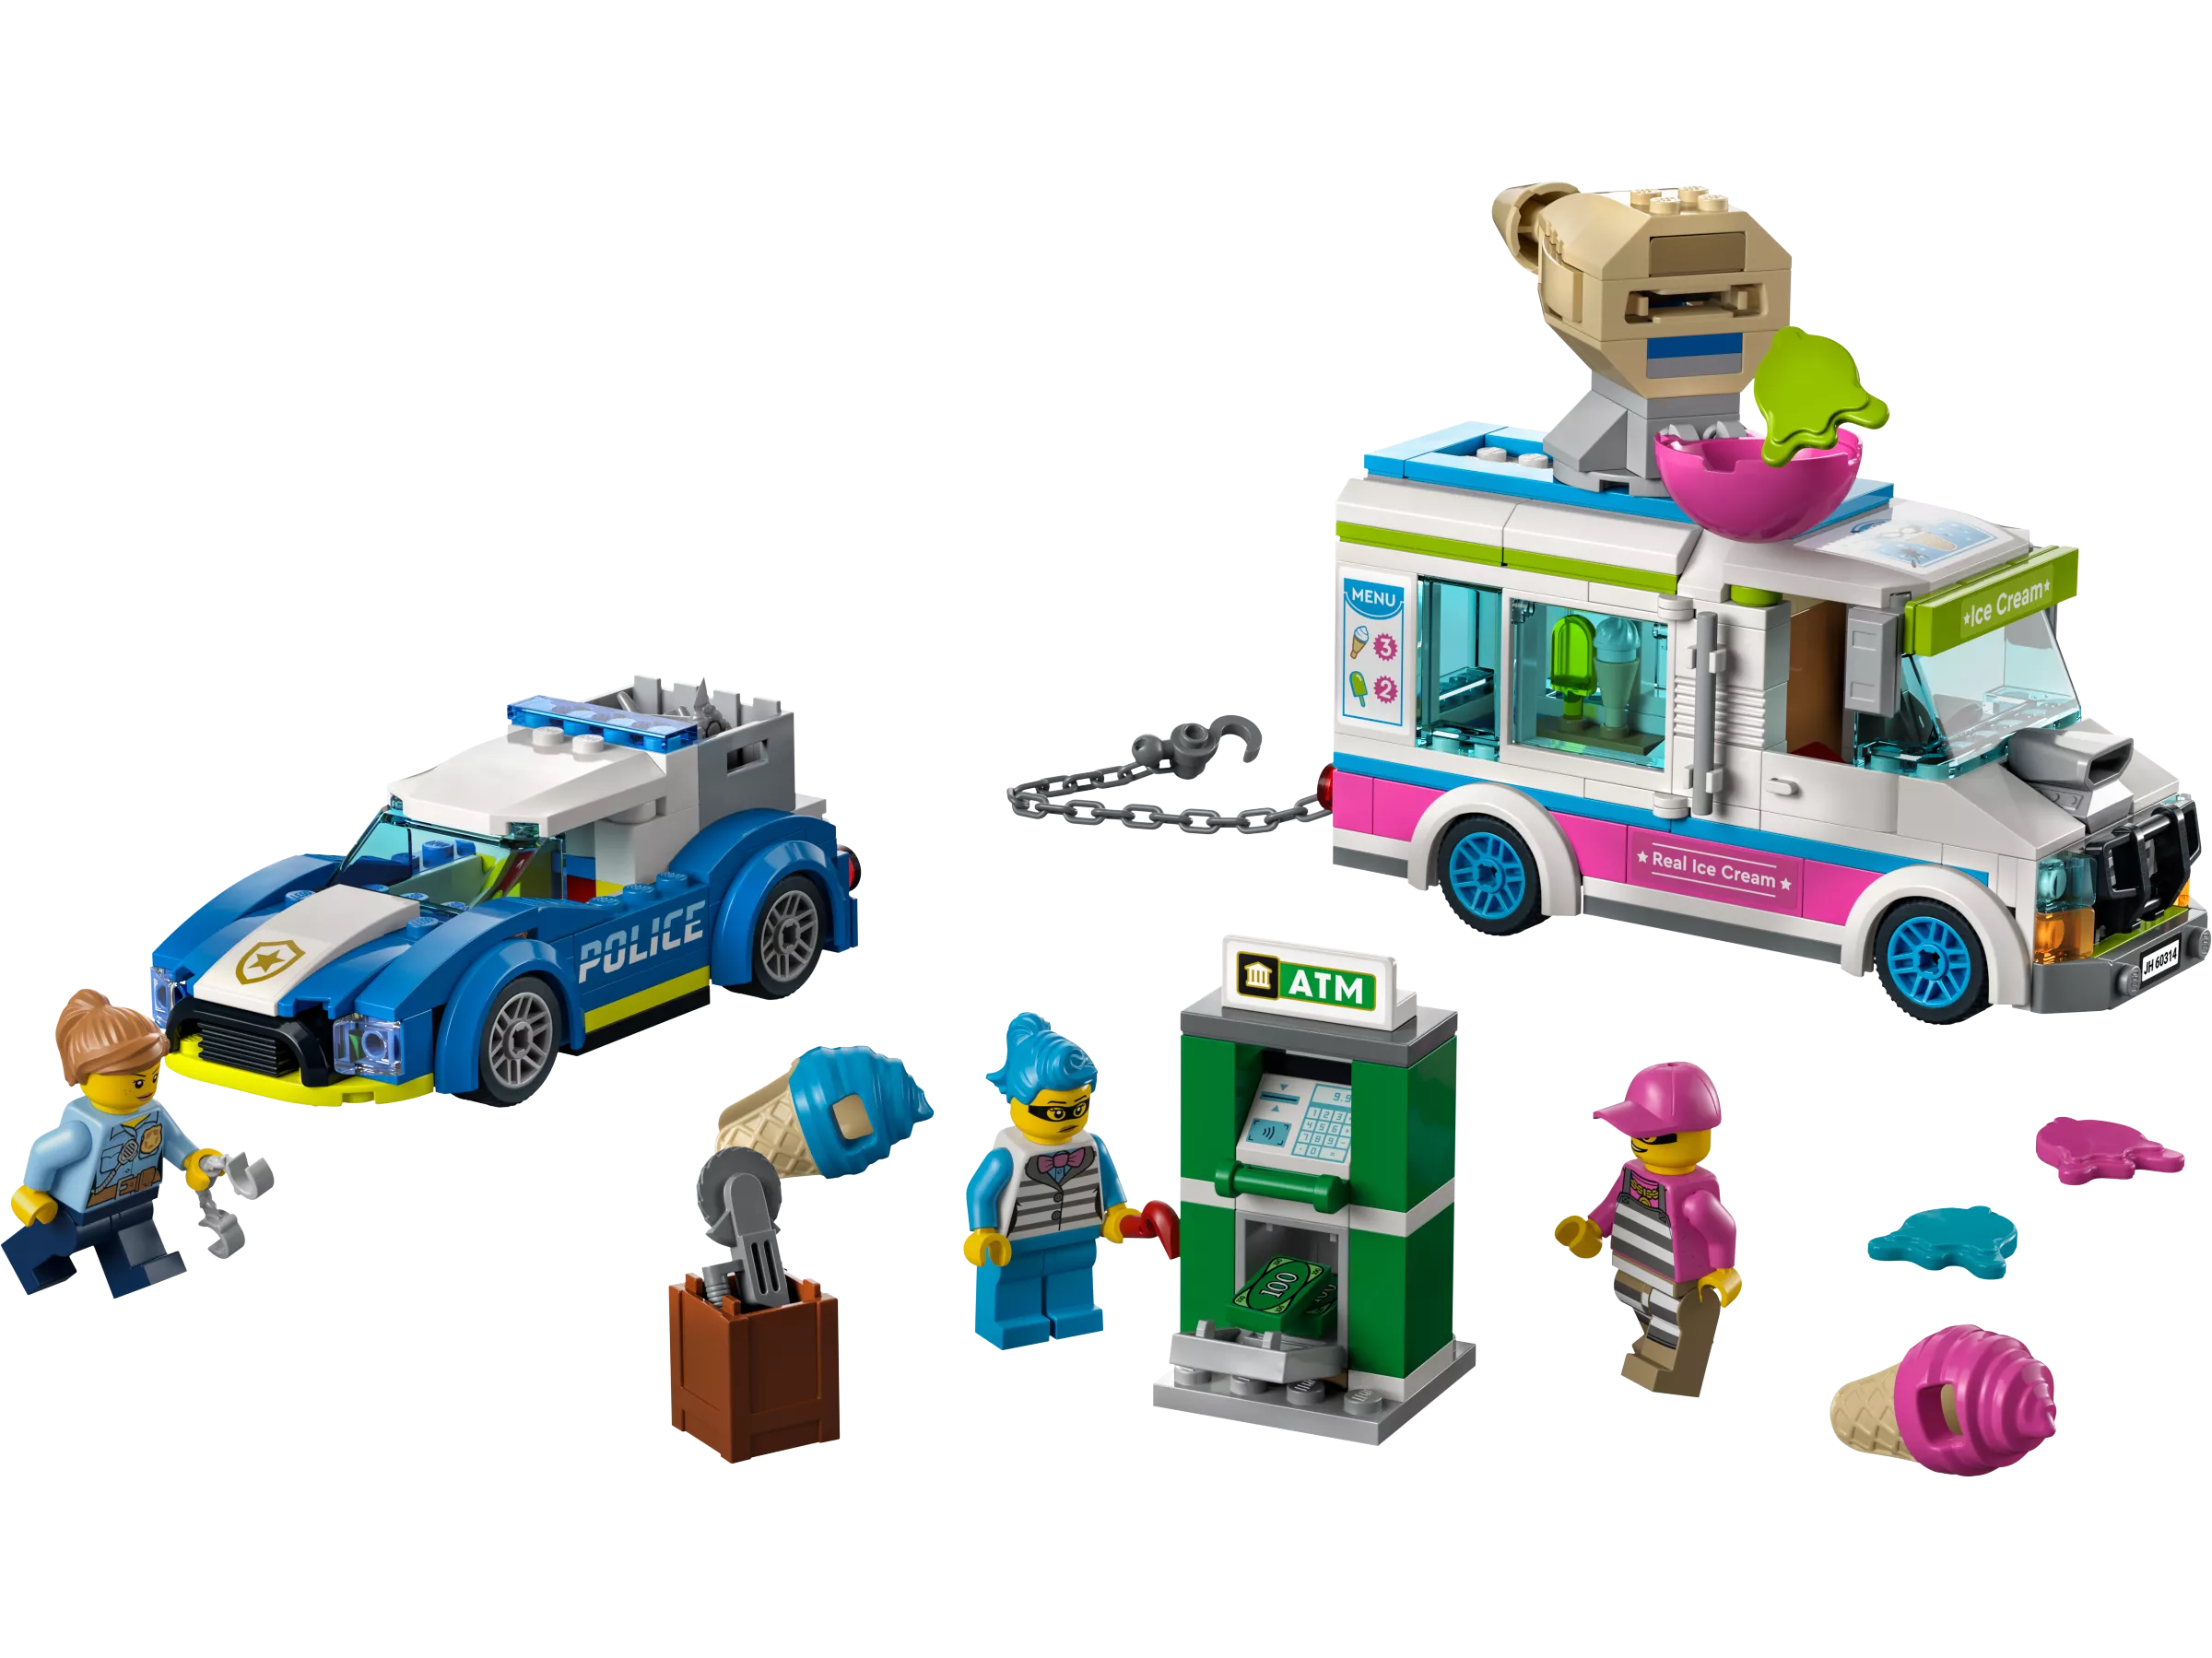 LEGO 60314 Eiswagen-Verfolgungsjagd